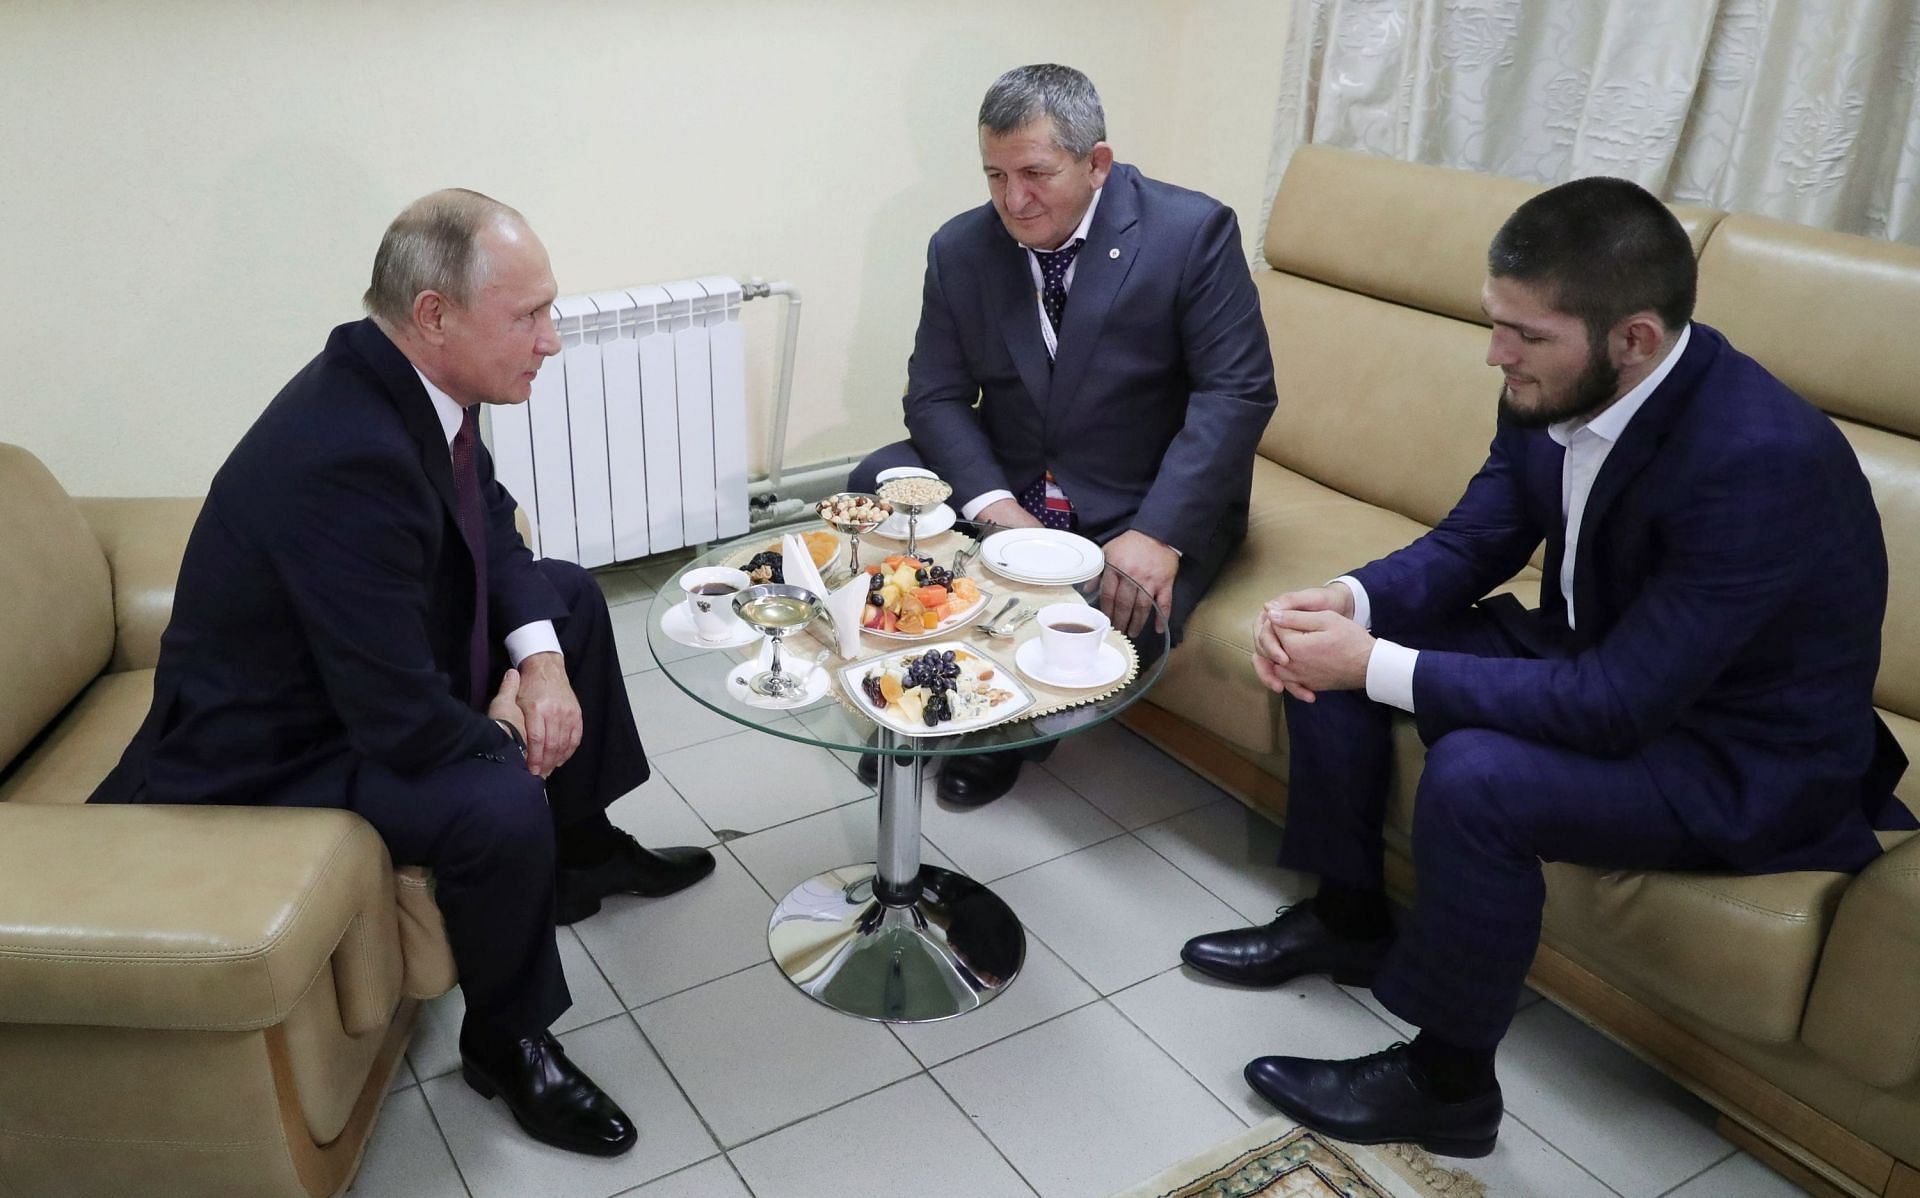 Khabib Nurmagomedov meets Vladimir Putin [Photo via @bokamotoESPN on Twitter]